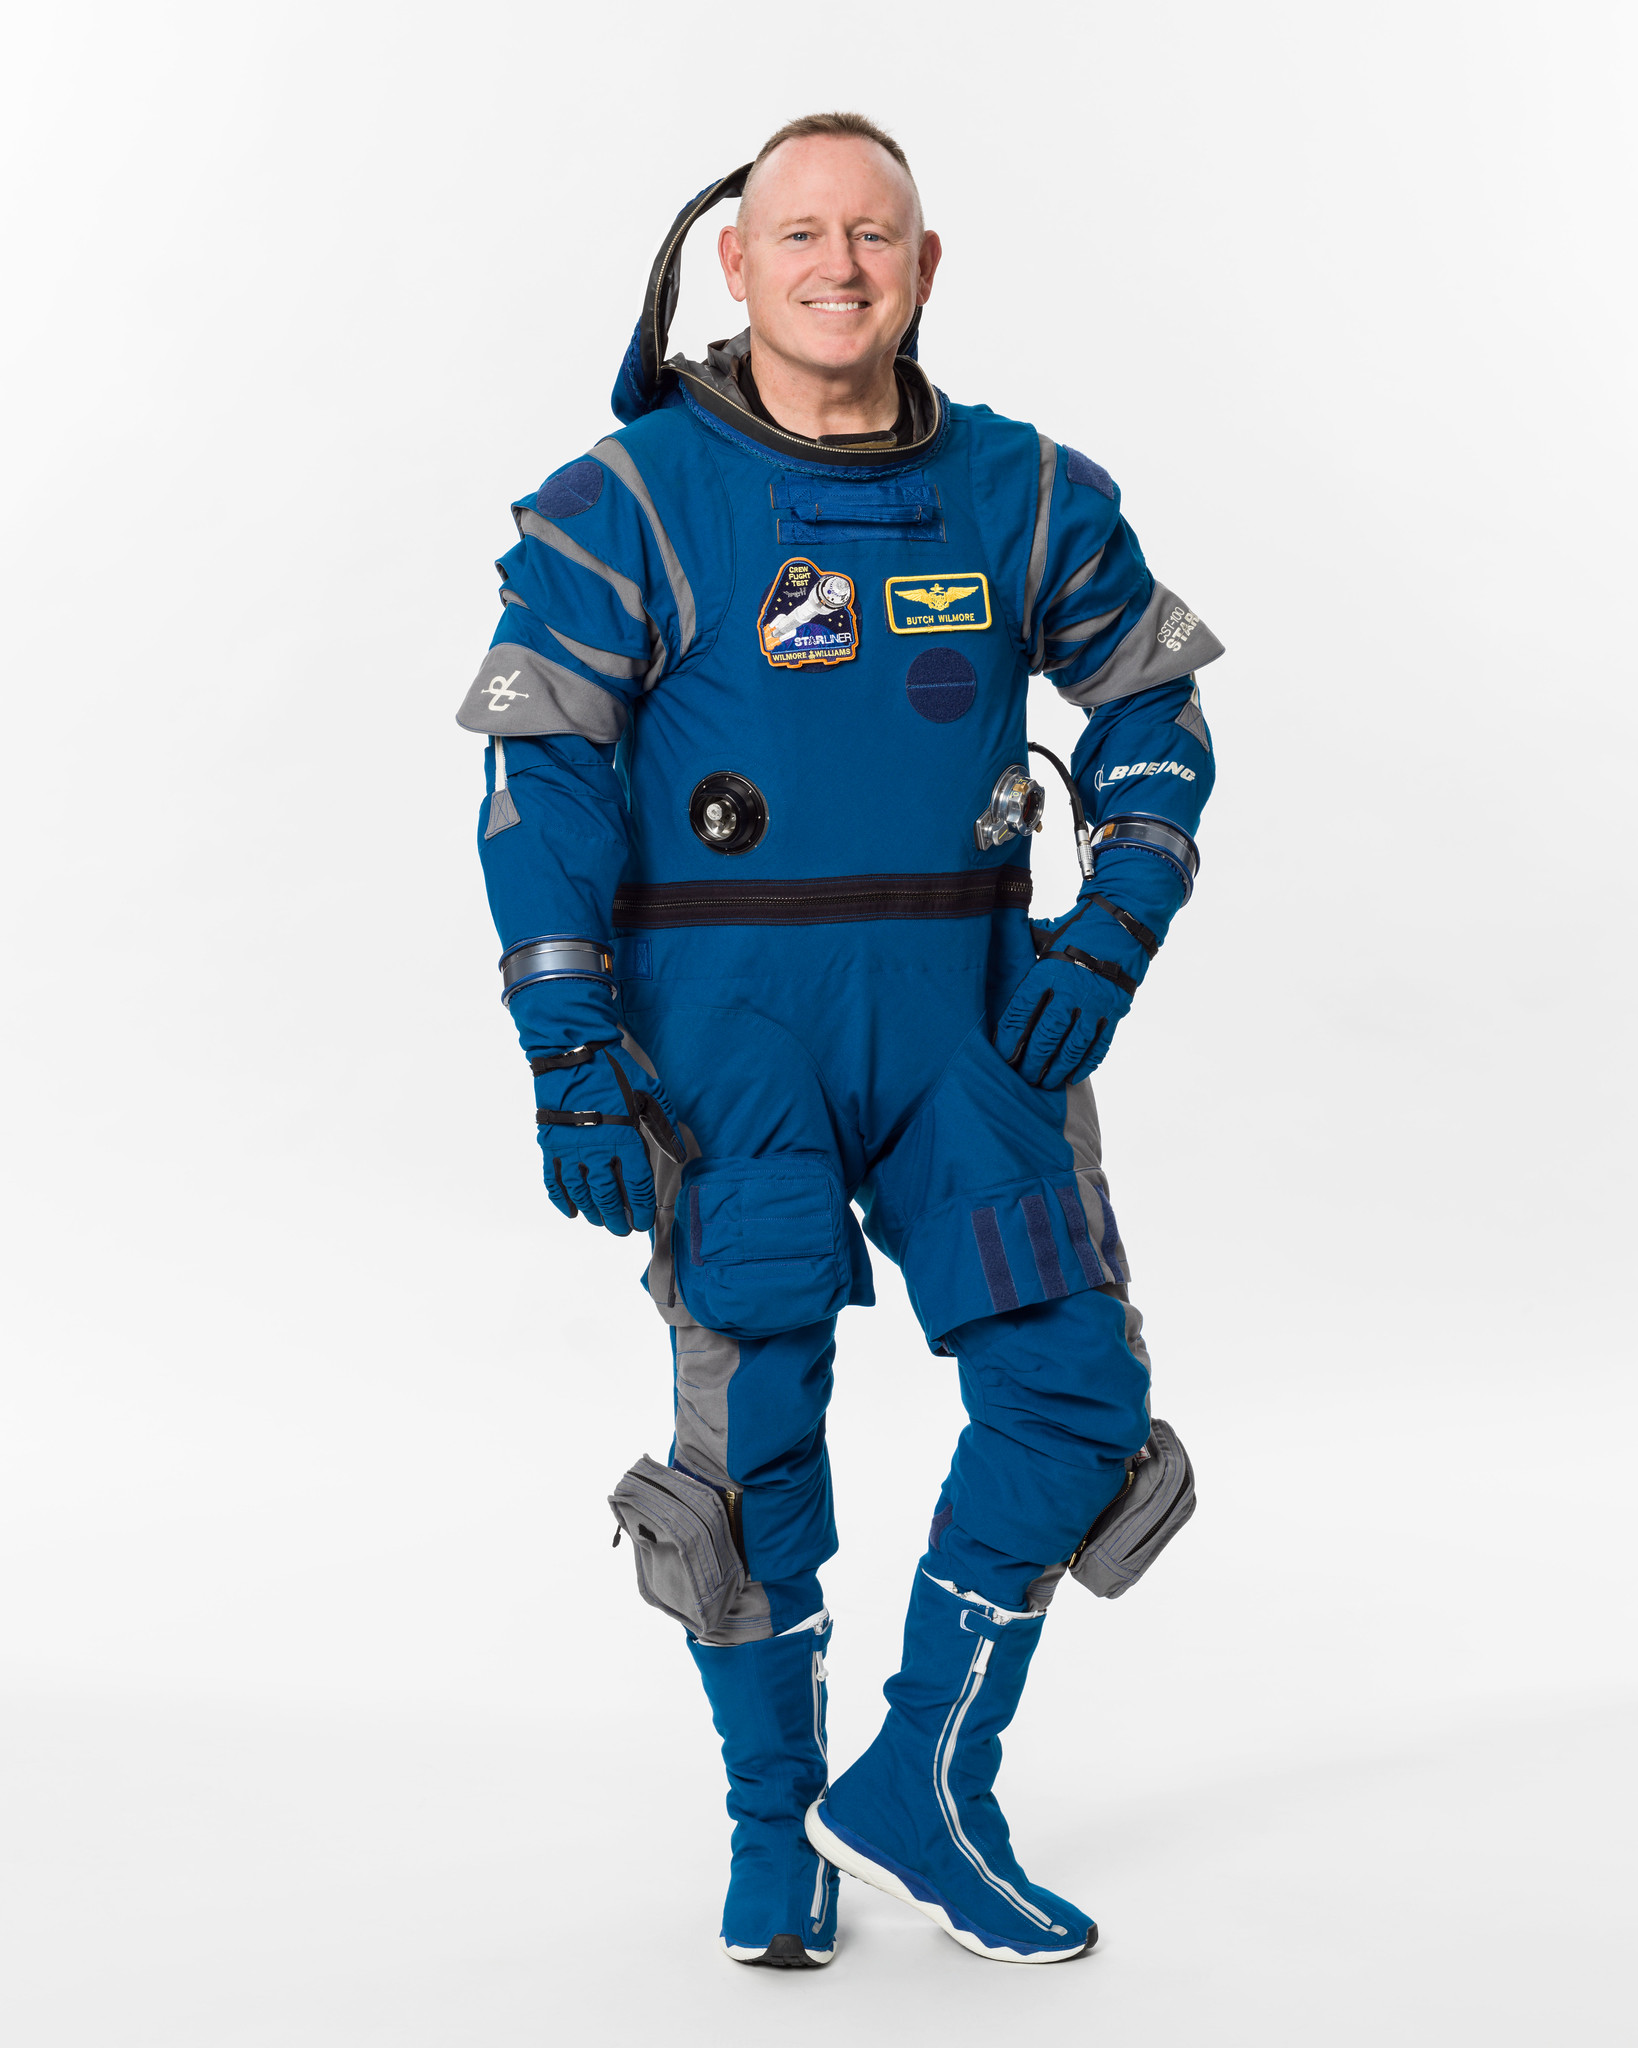 an astronaut poses for a portrait in a blue flight suit